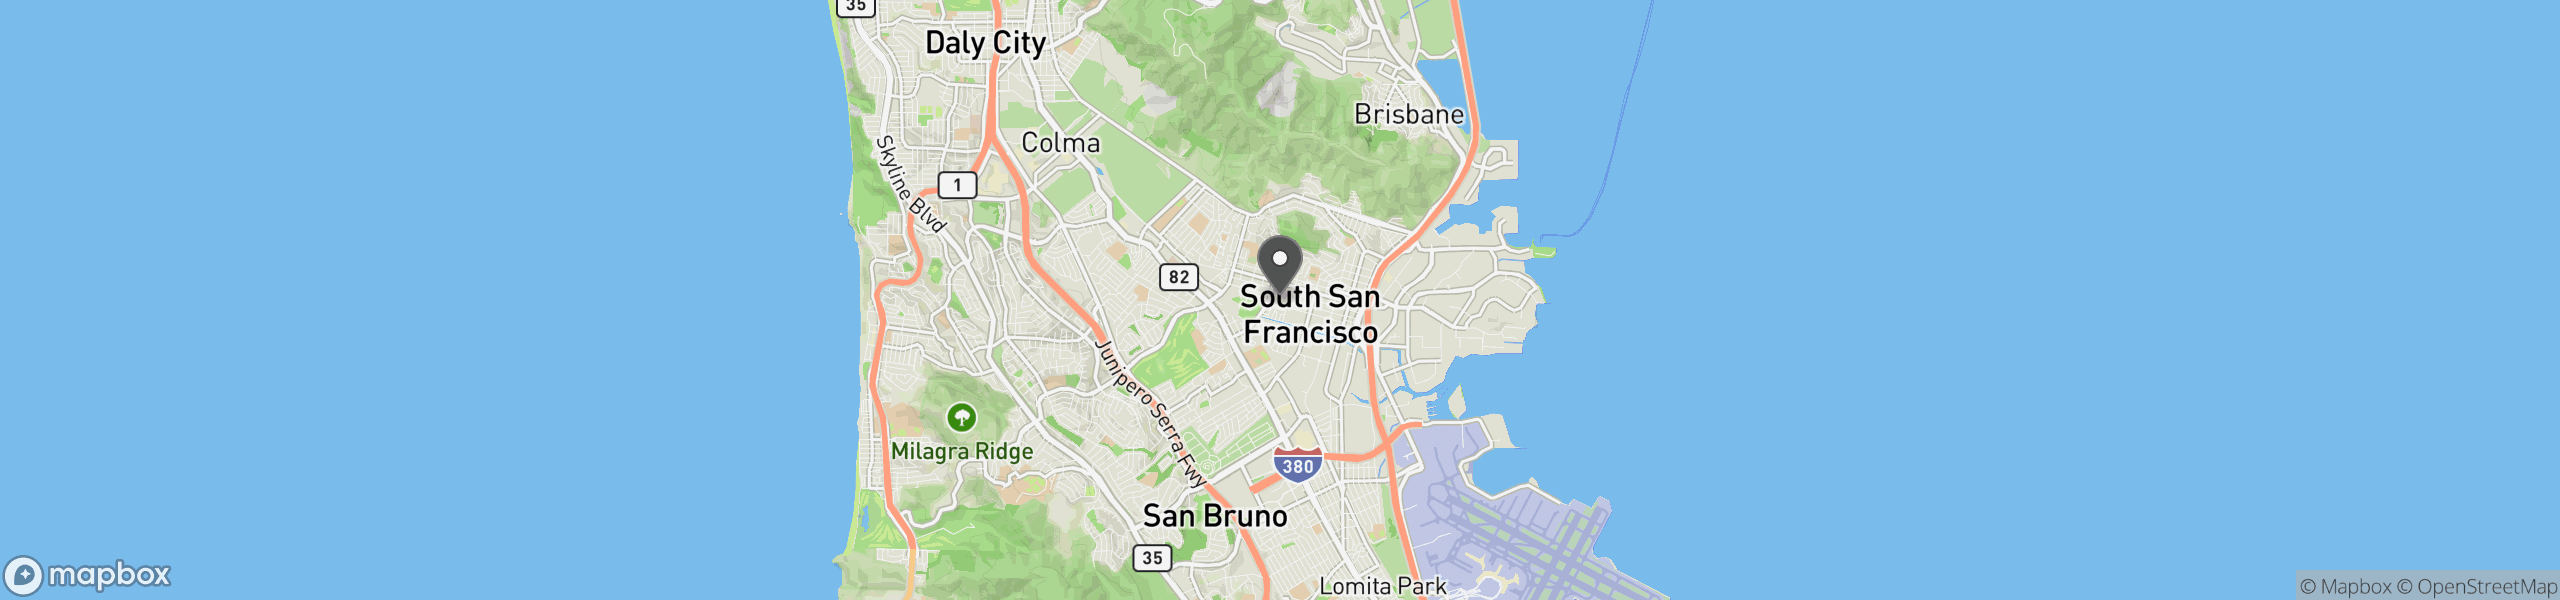 South San Francisco, CA 94080